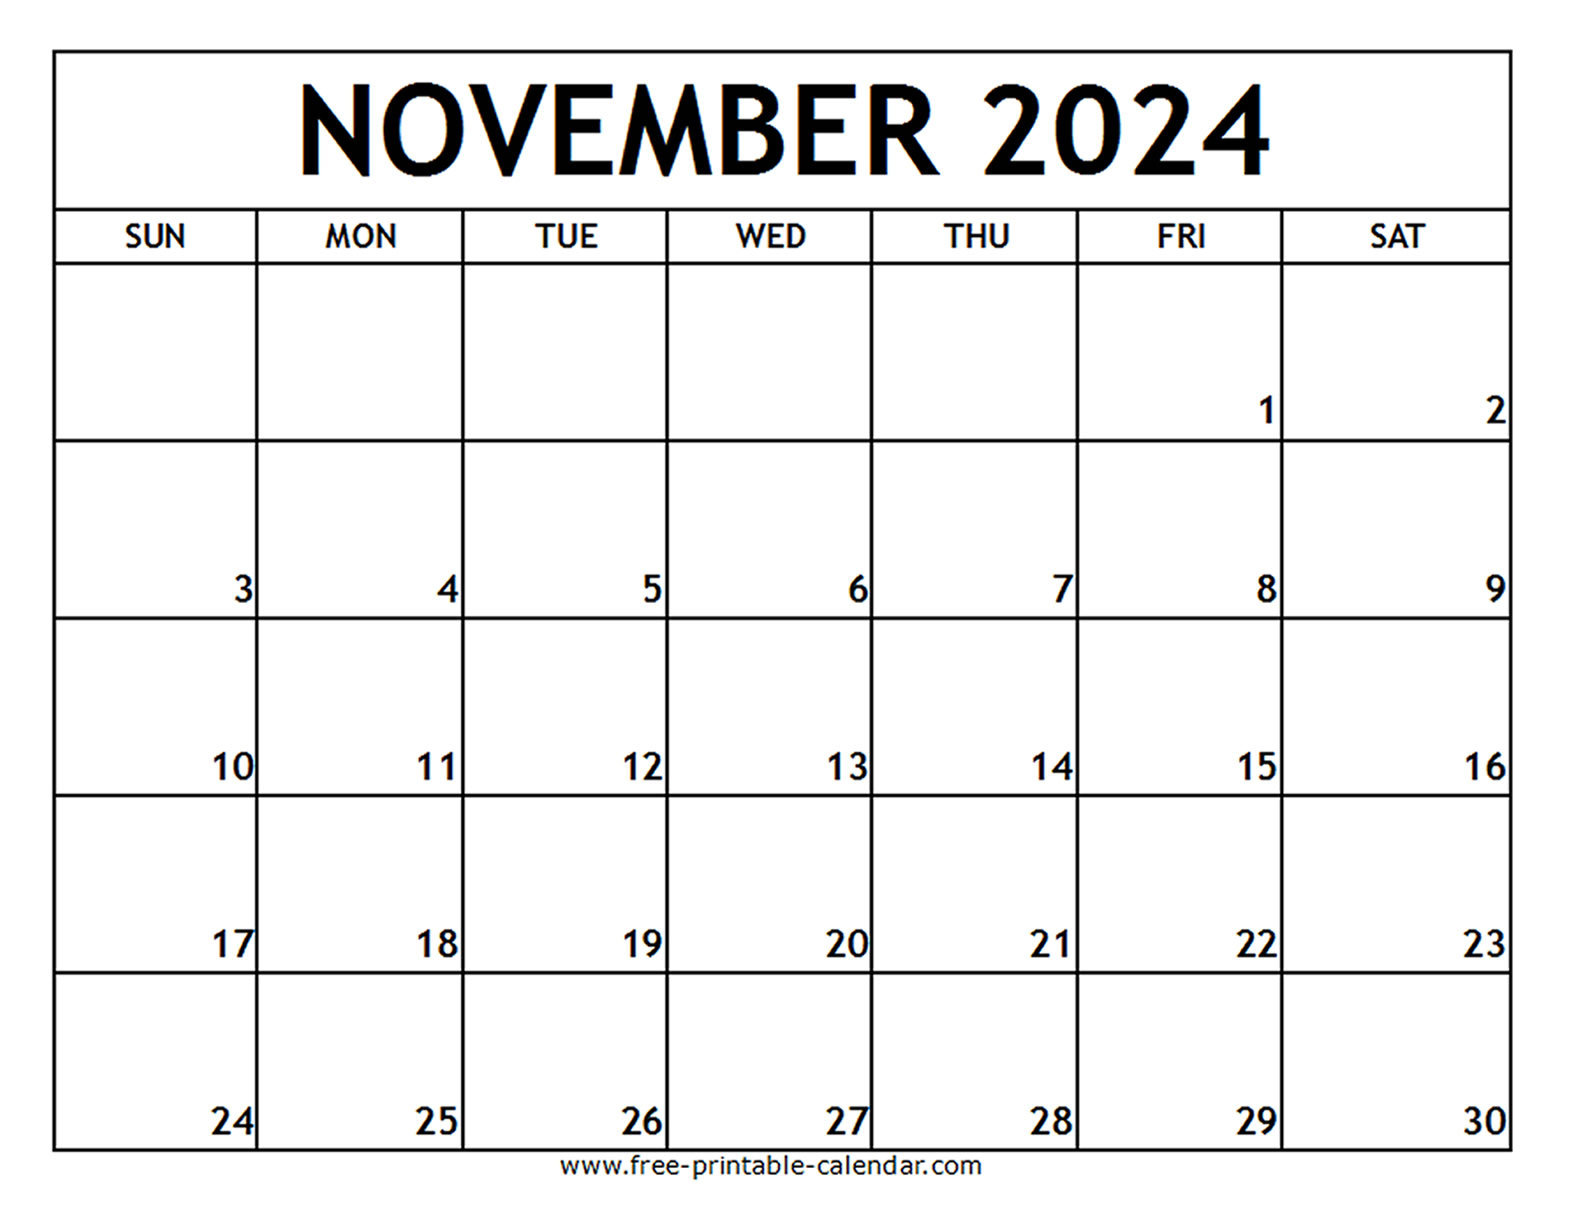 November 2024 Printable Calendar - Free-Printable-Calendar | November 2024 Calendar Printable Free